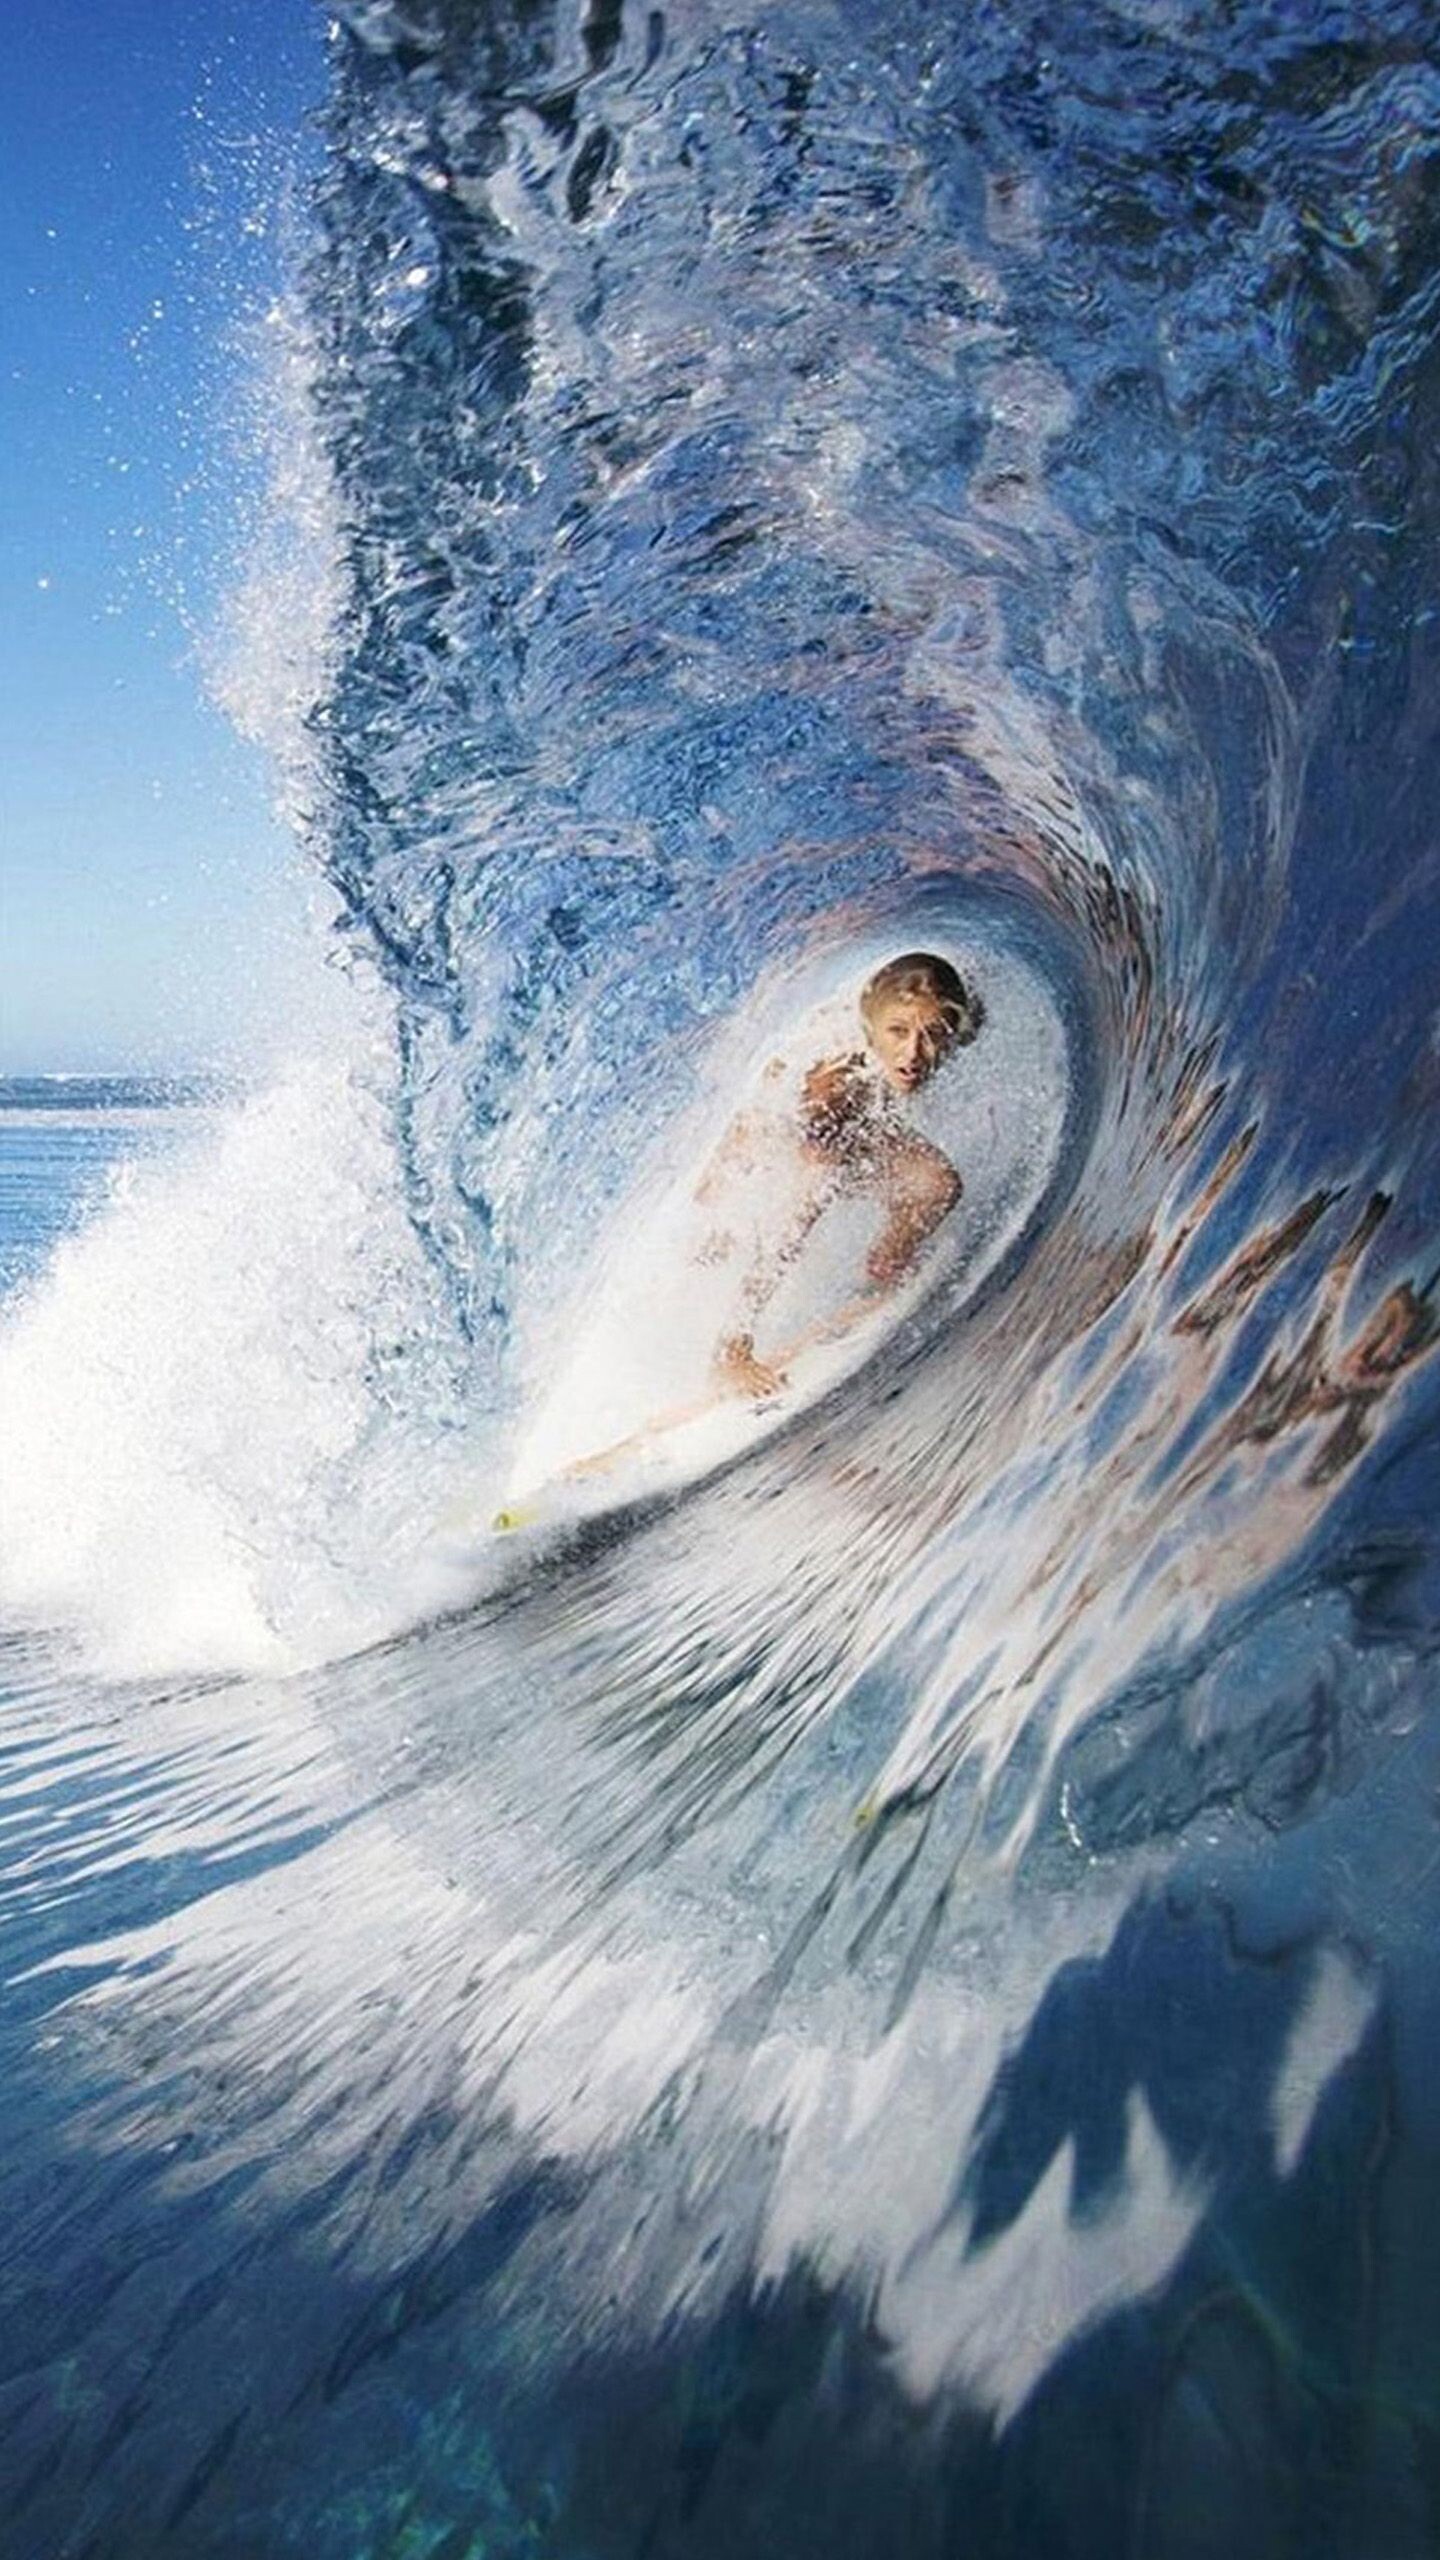 Girl Surfing: Water tricks by a woman stuntman, Riding a surfboard, Summer Olympics discipline. 1440x2560 HD Wallpaper.